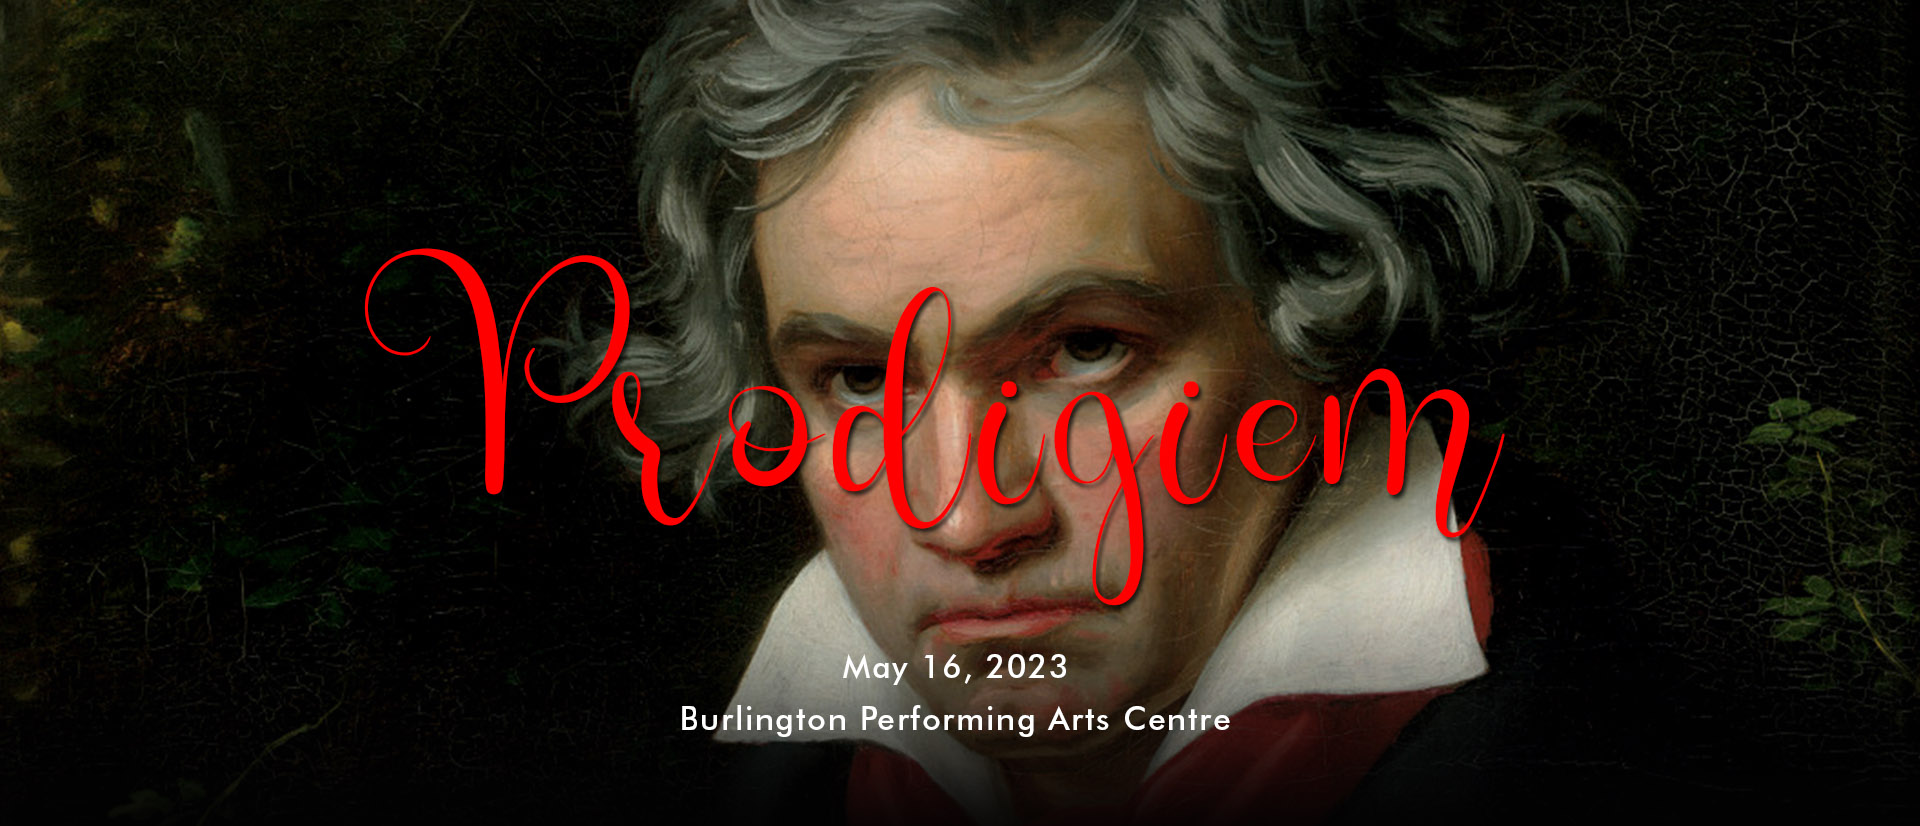 BNMO Prodigiem concert on May 16, 2023 at the Burlington Performing Arts Centre